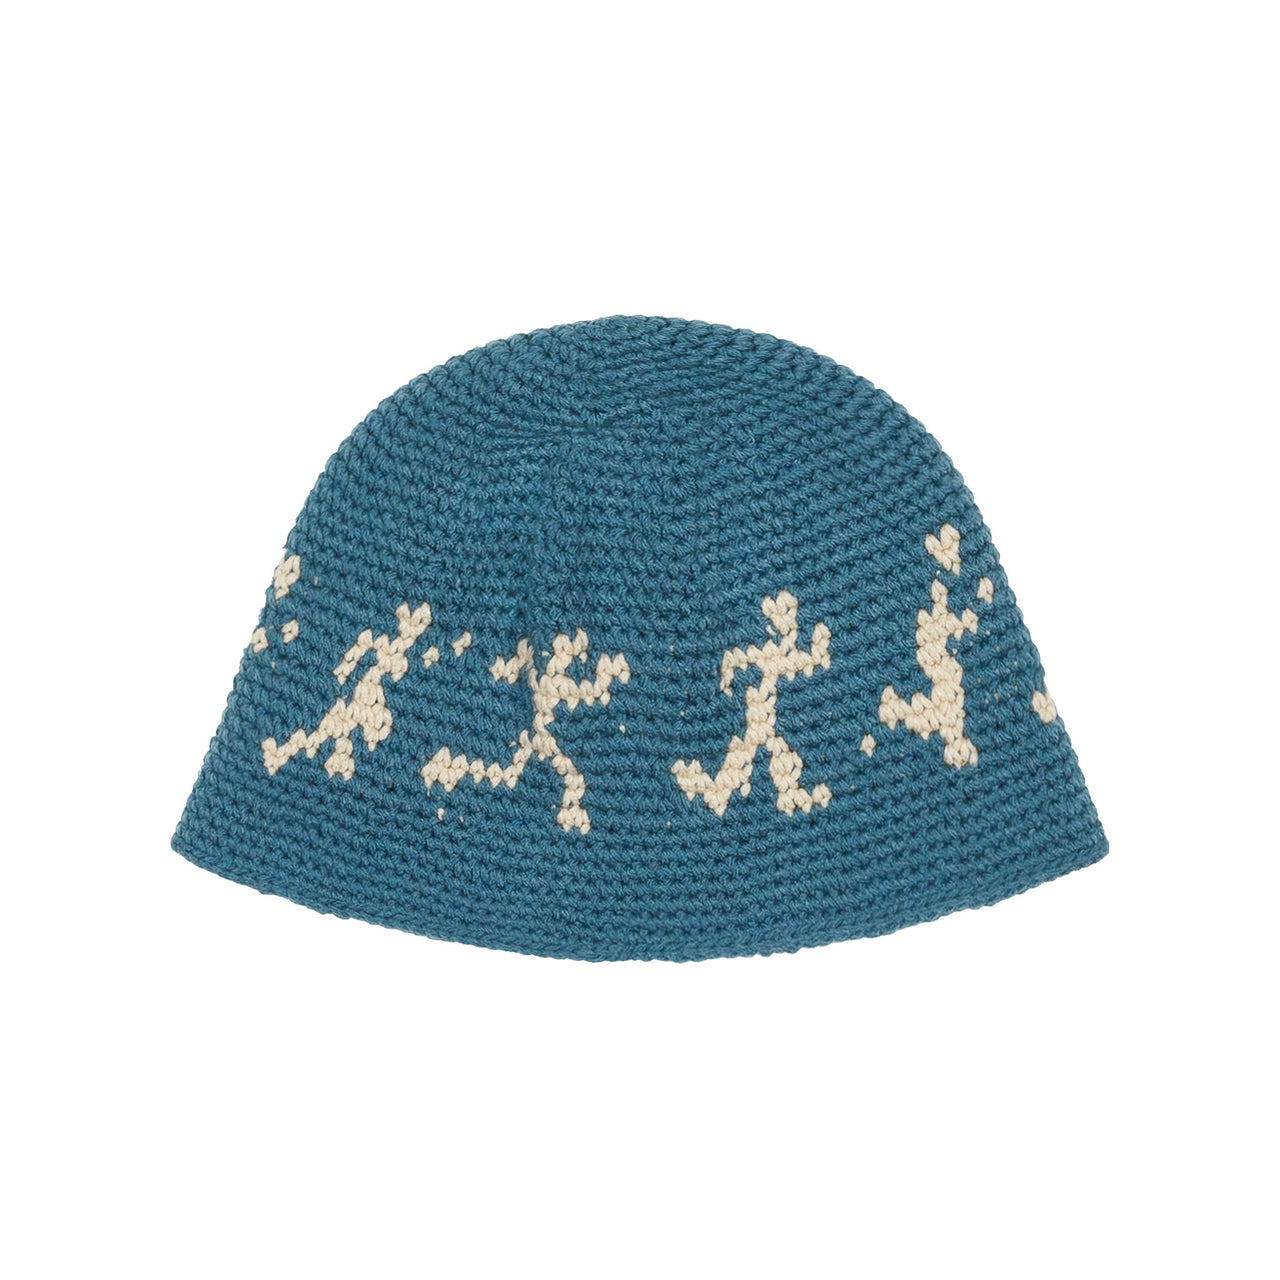 Running Guys Crochet Hat [Blue]